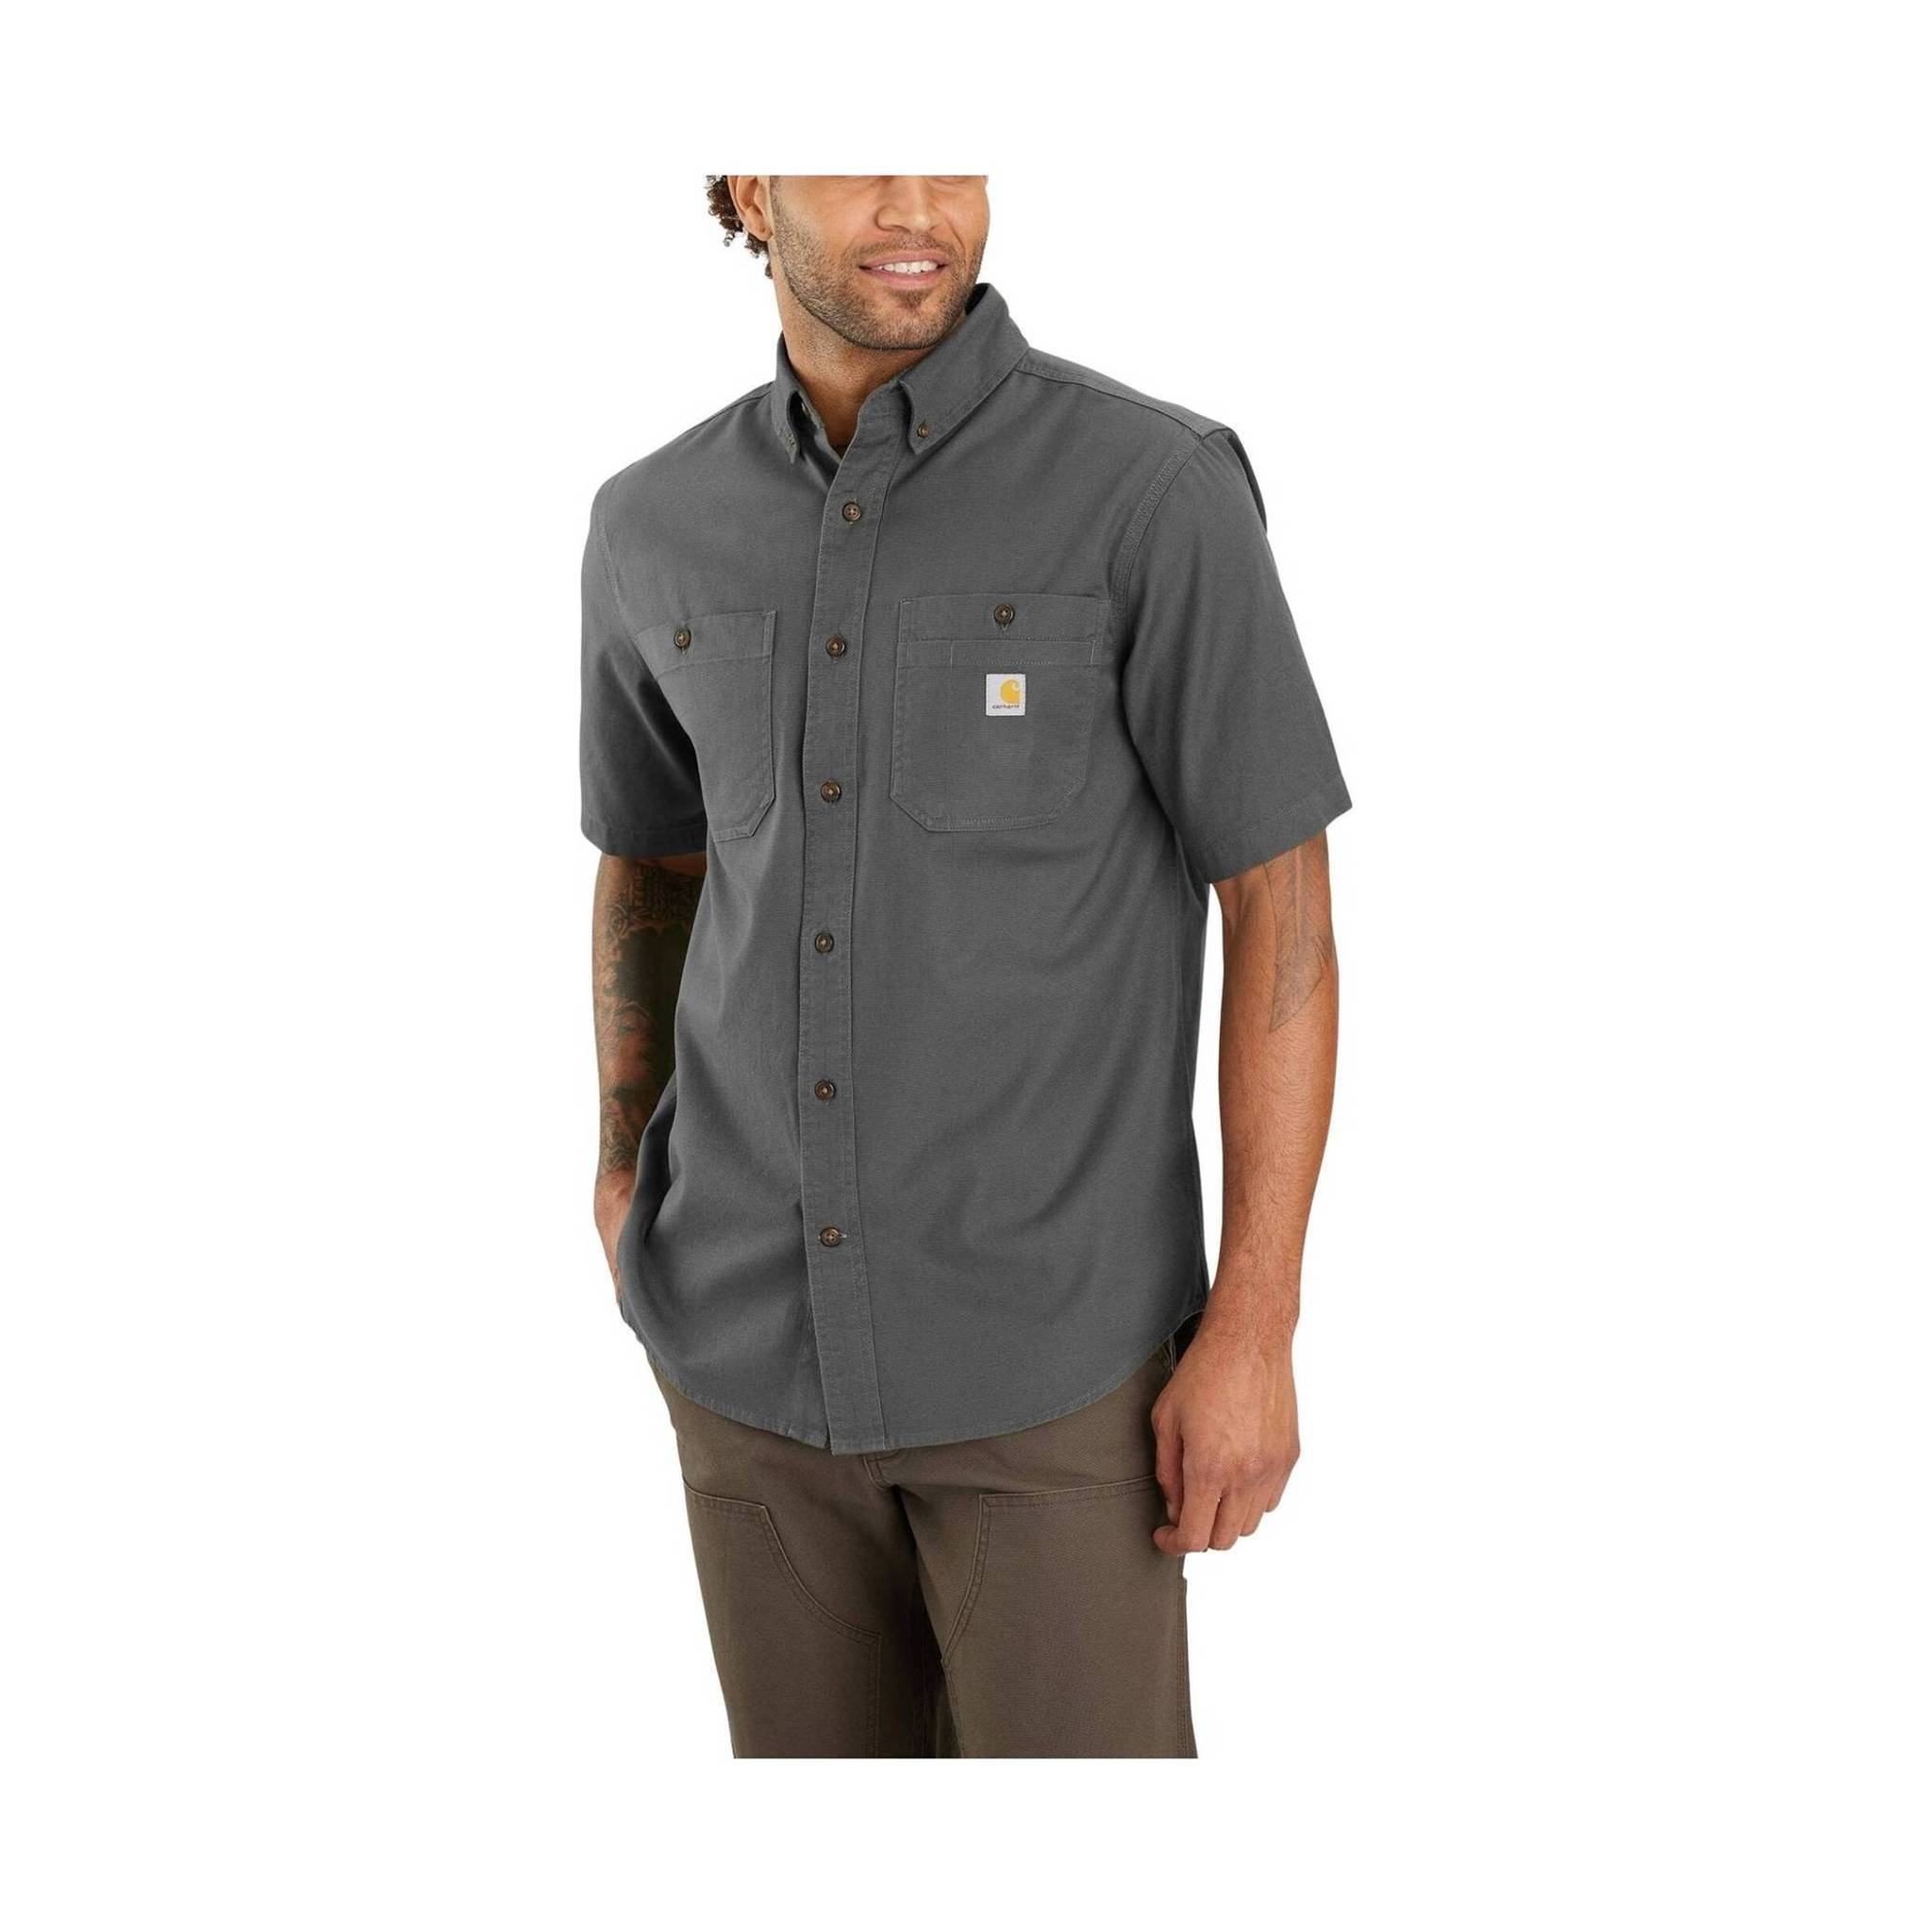 Carhartt Rugged Professional Series Short Sleeve Shirt, Product